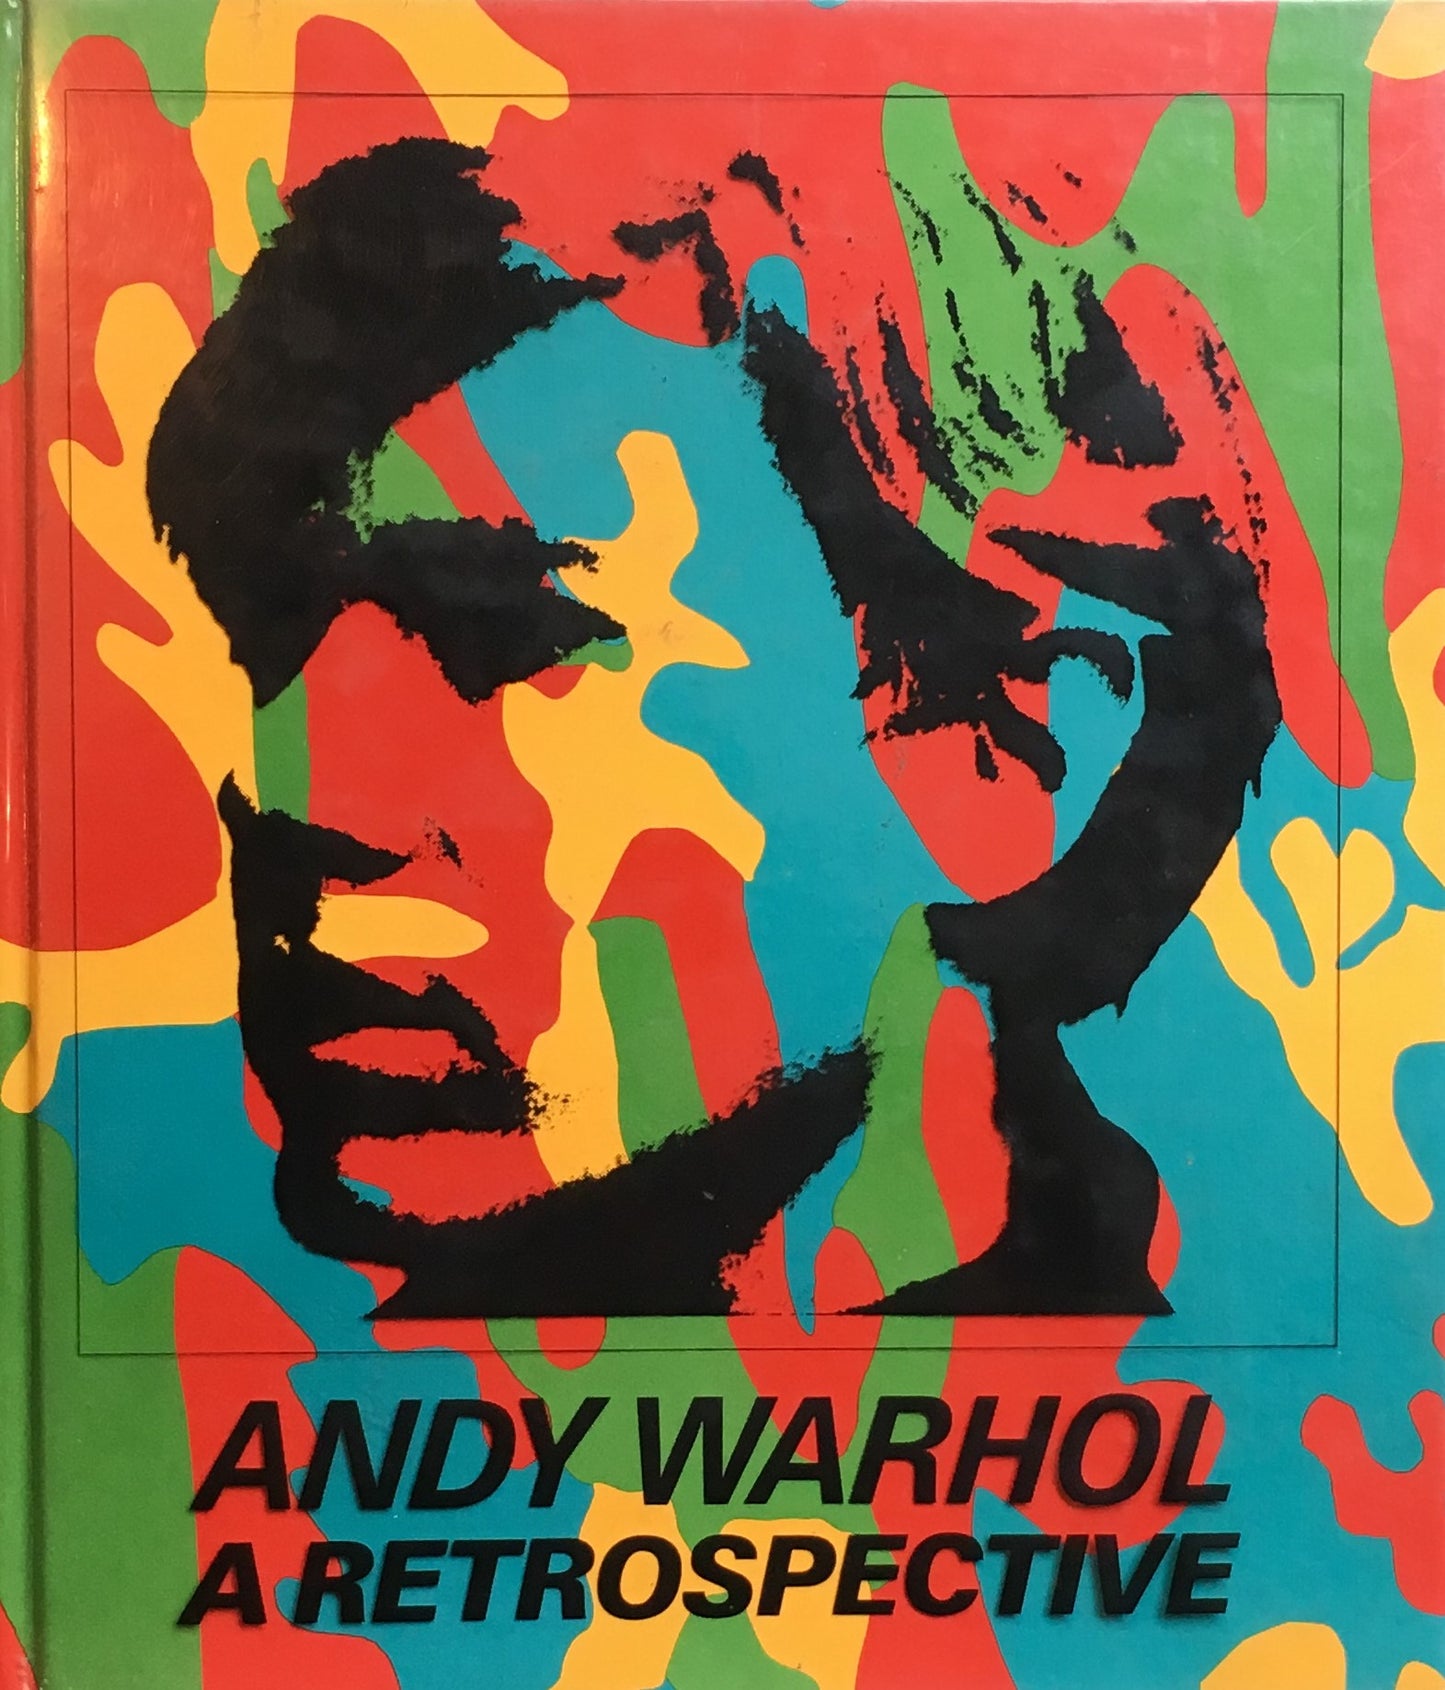 ANDY WARHOL  A RETROSPECTIVE  hardcover edition  edited by KYNASTON McSHINE